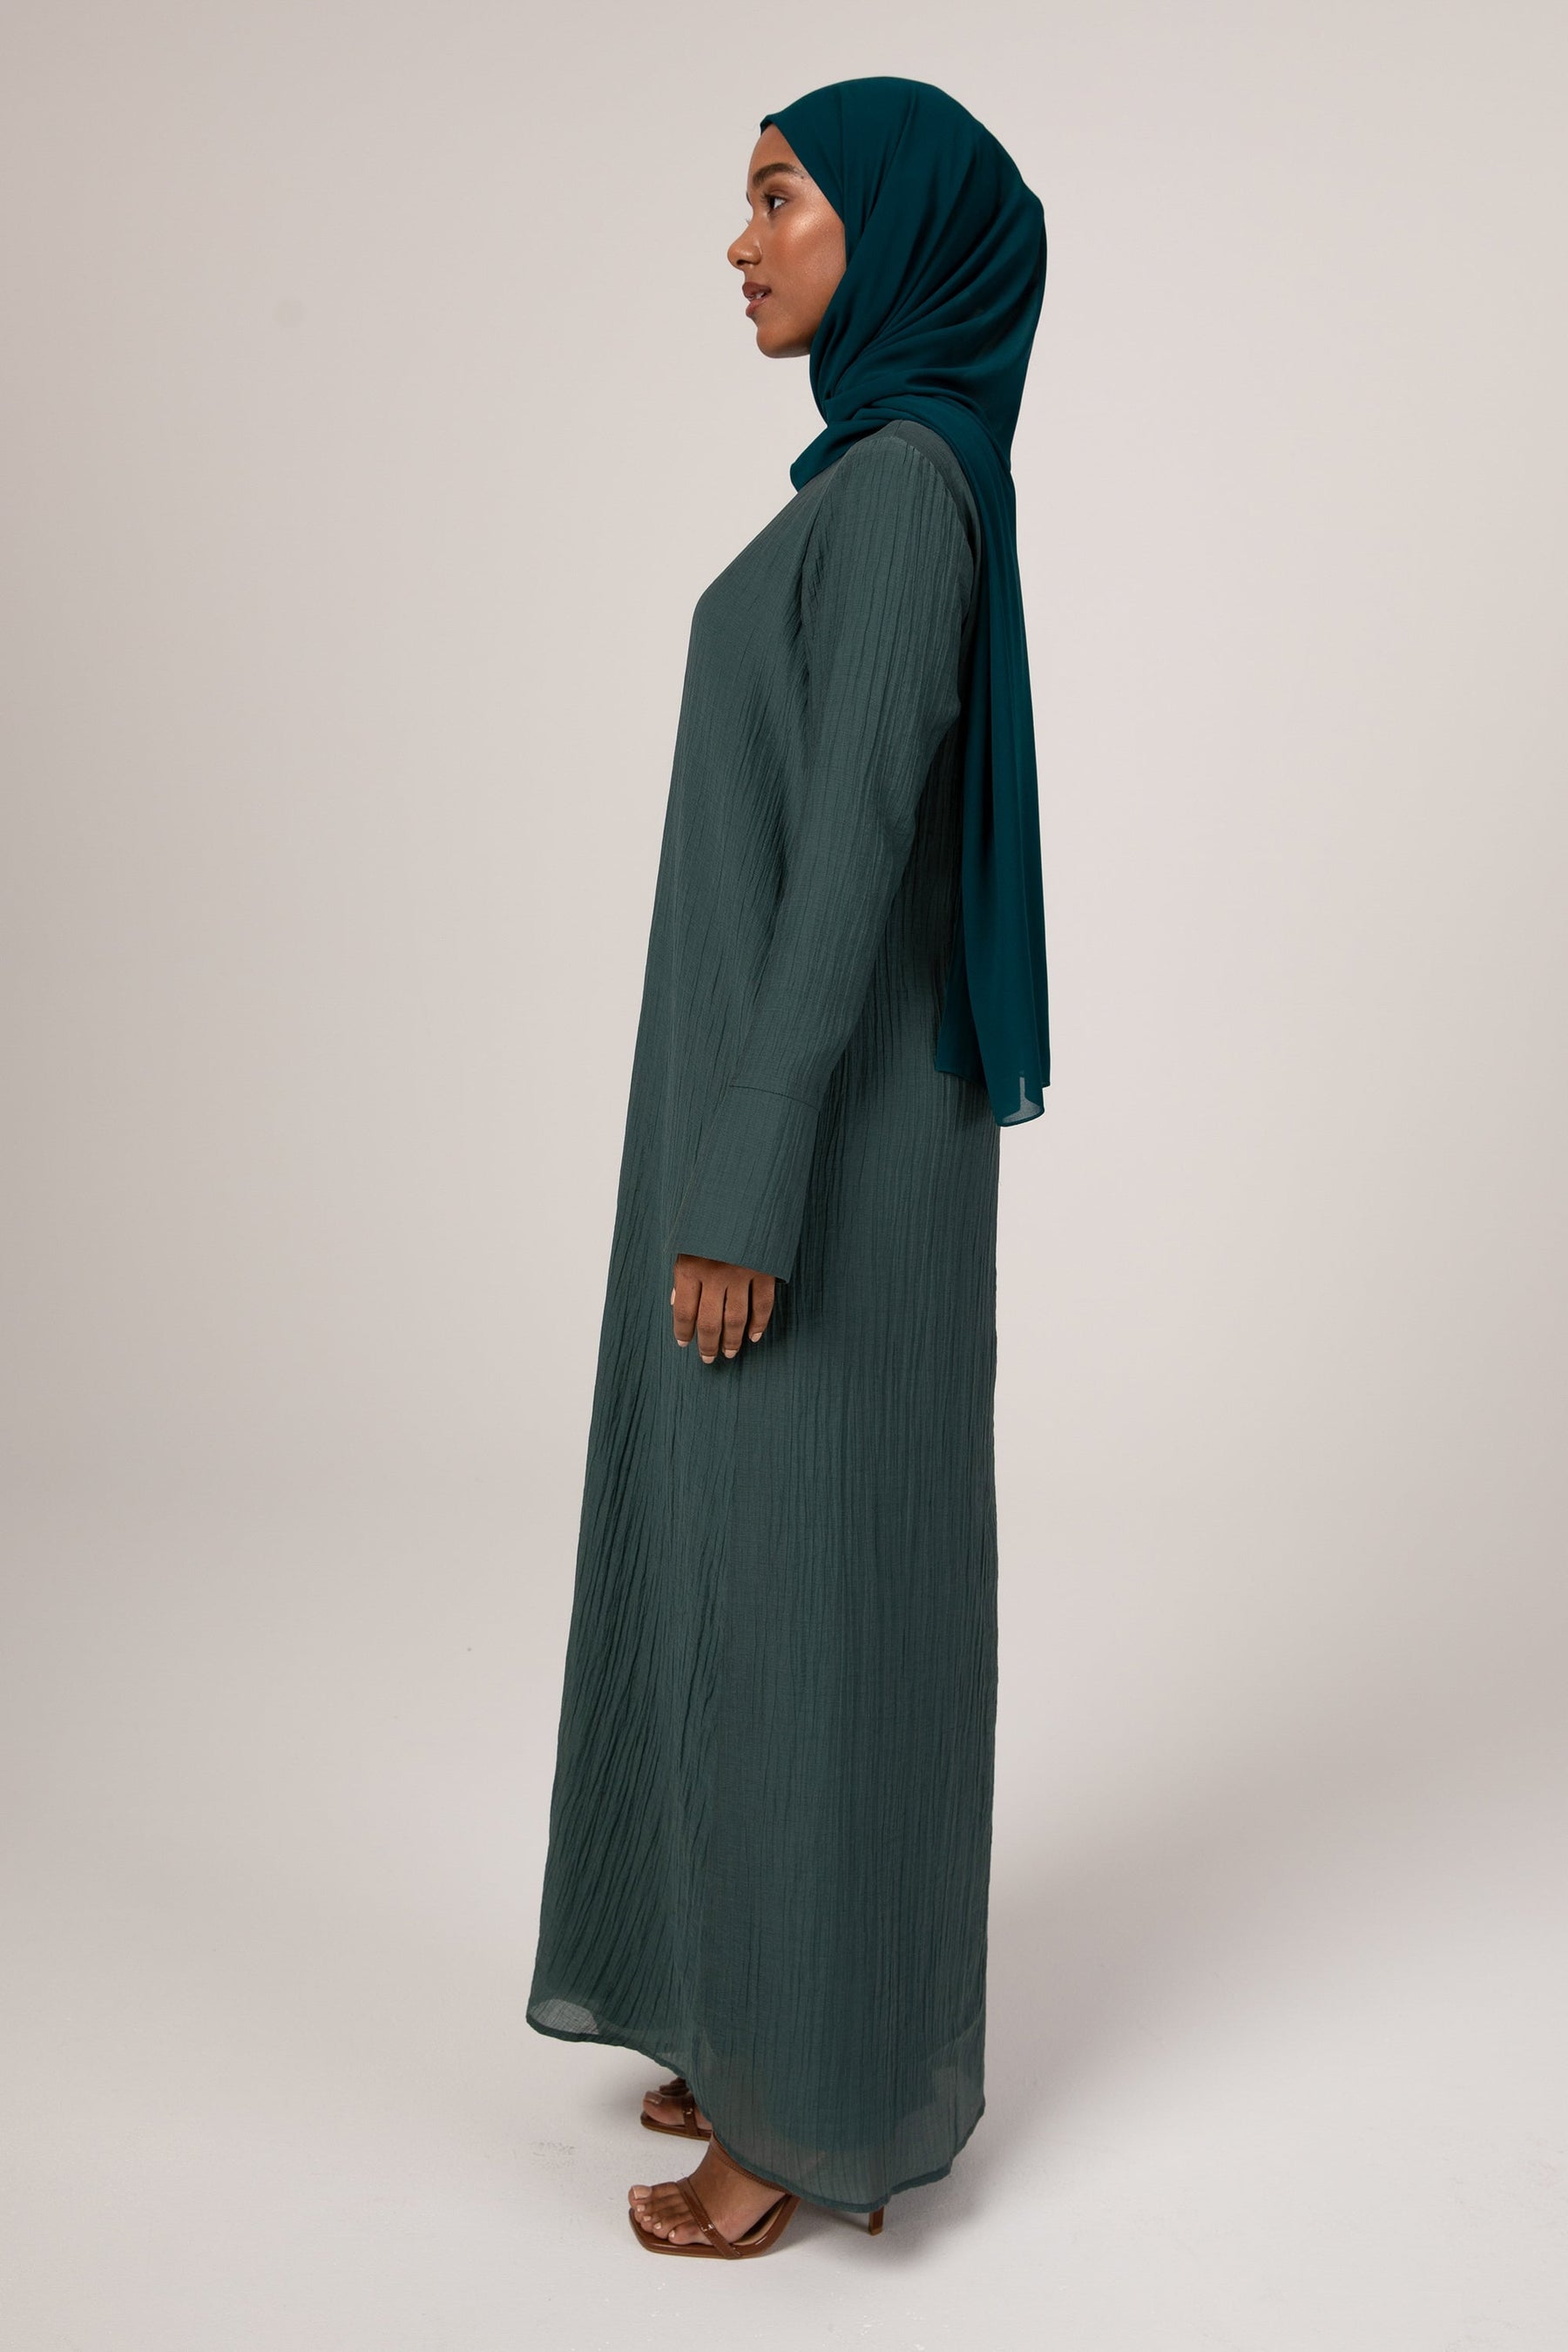 Hala Textured Shift Maxi Dress - Deep Teal Veiled Collection 